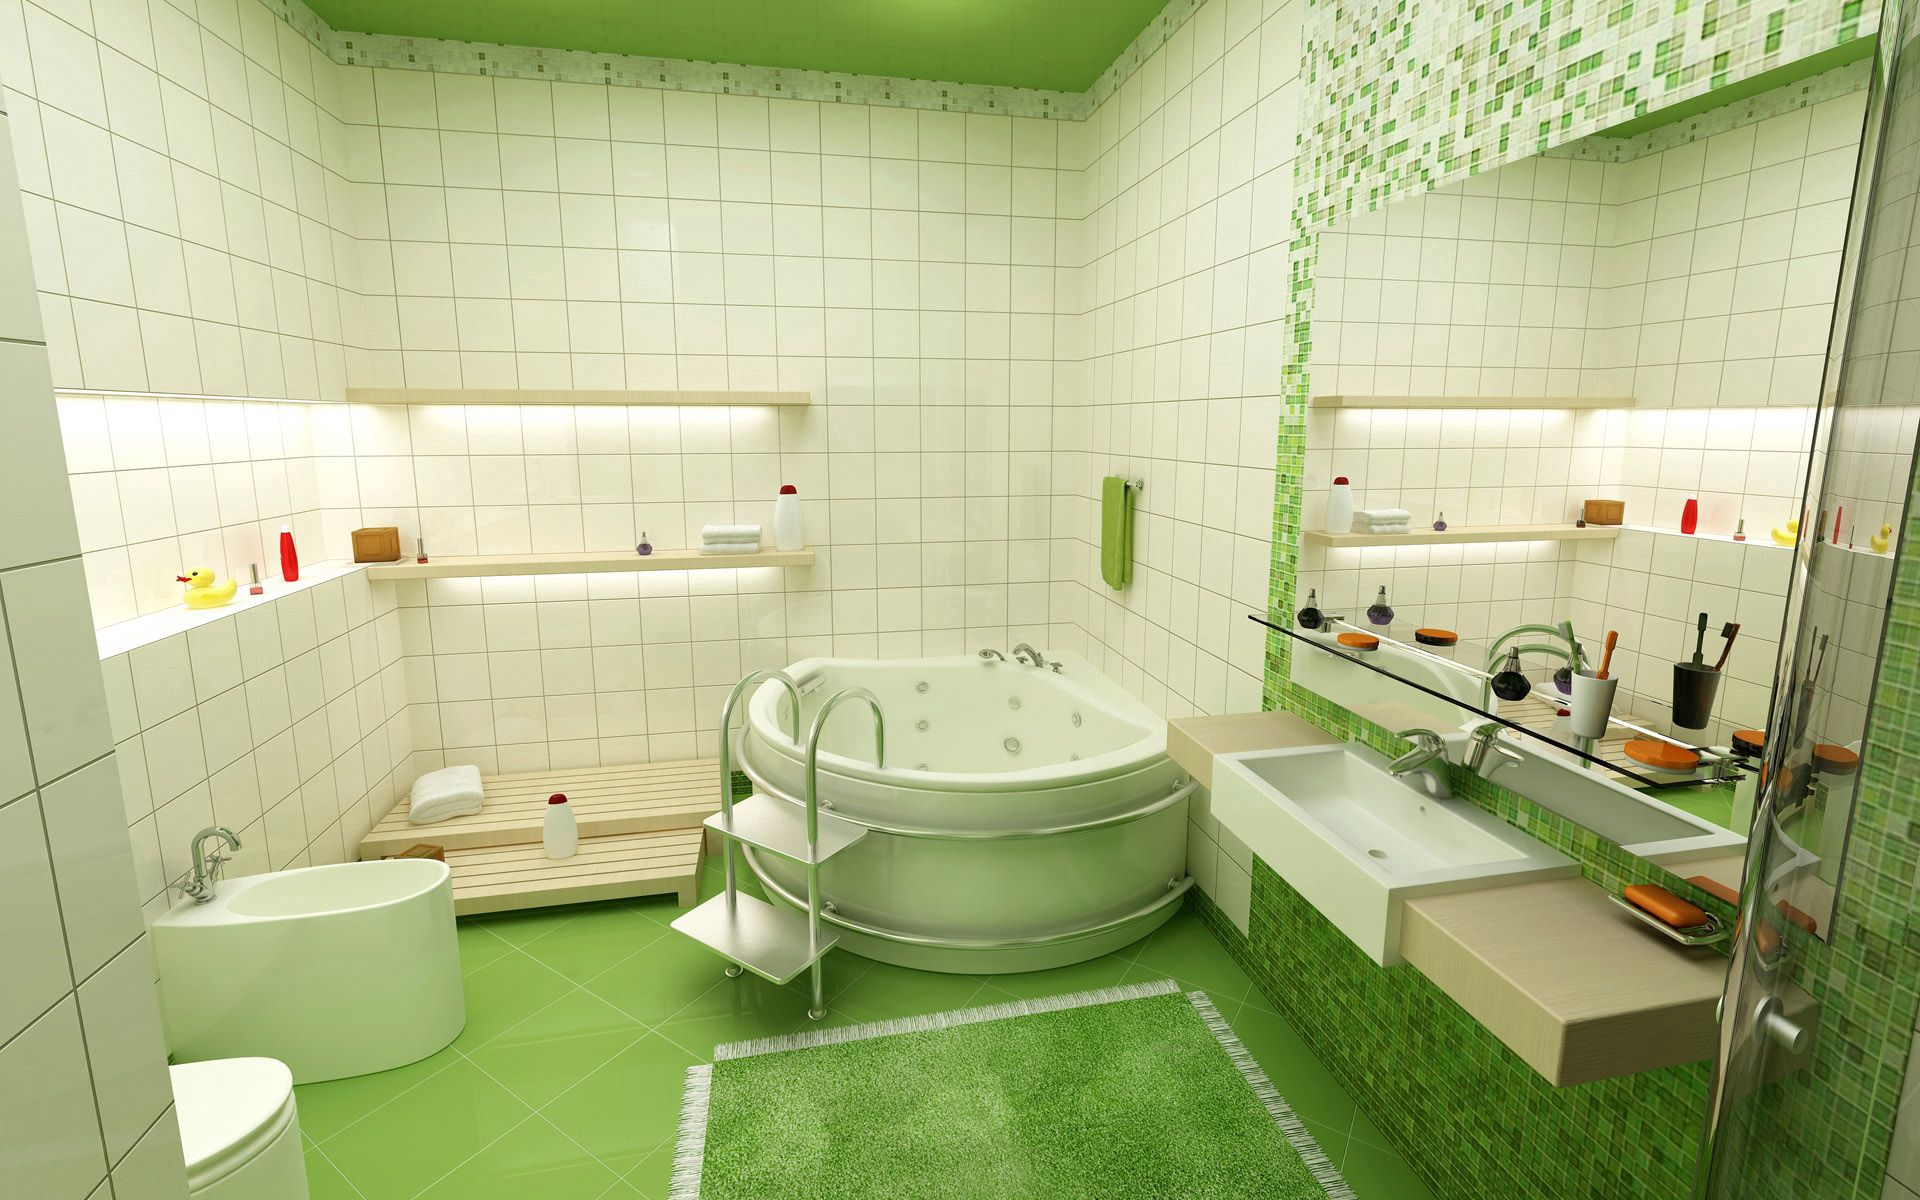 interior, miscellanea, miscellaneous, style, bathroom, tile, plumbing